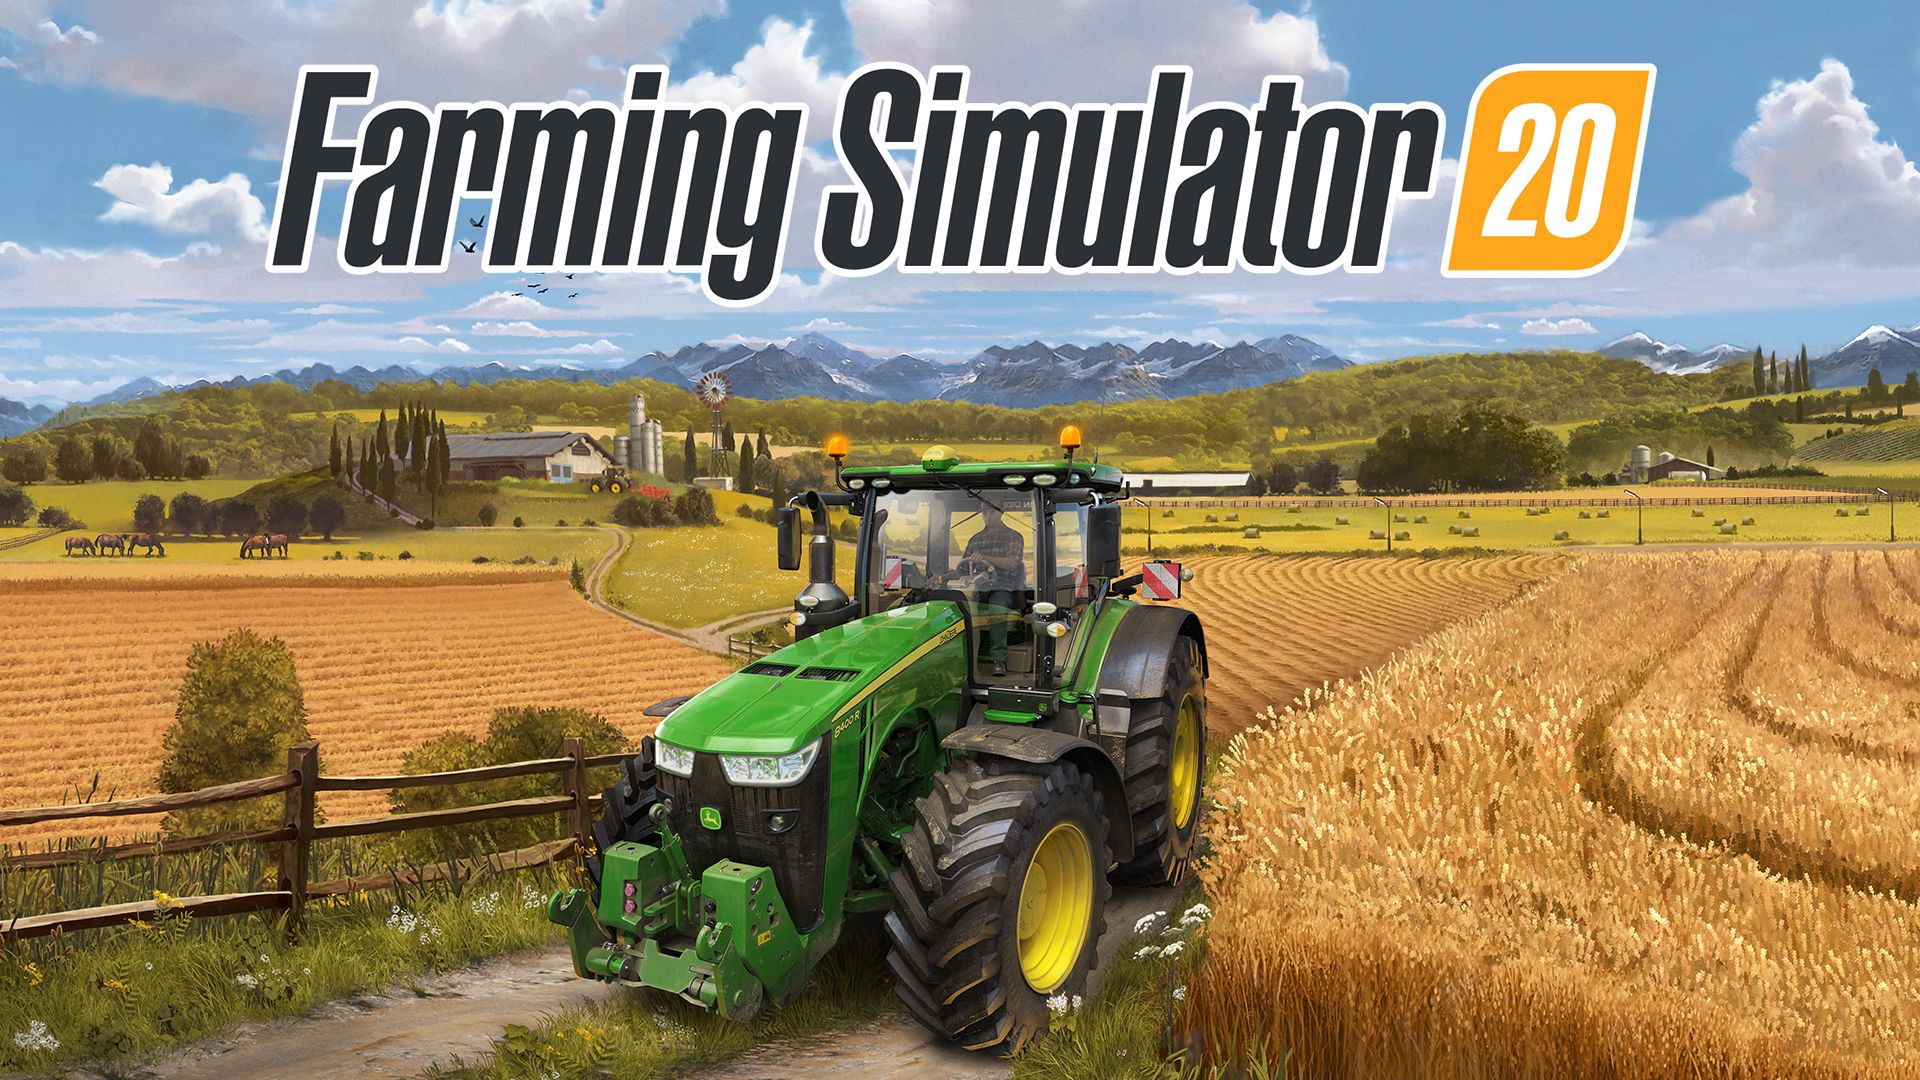 Farming Simulator 20 for Nintendo Switch Game Details